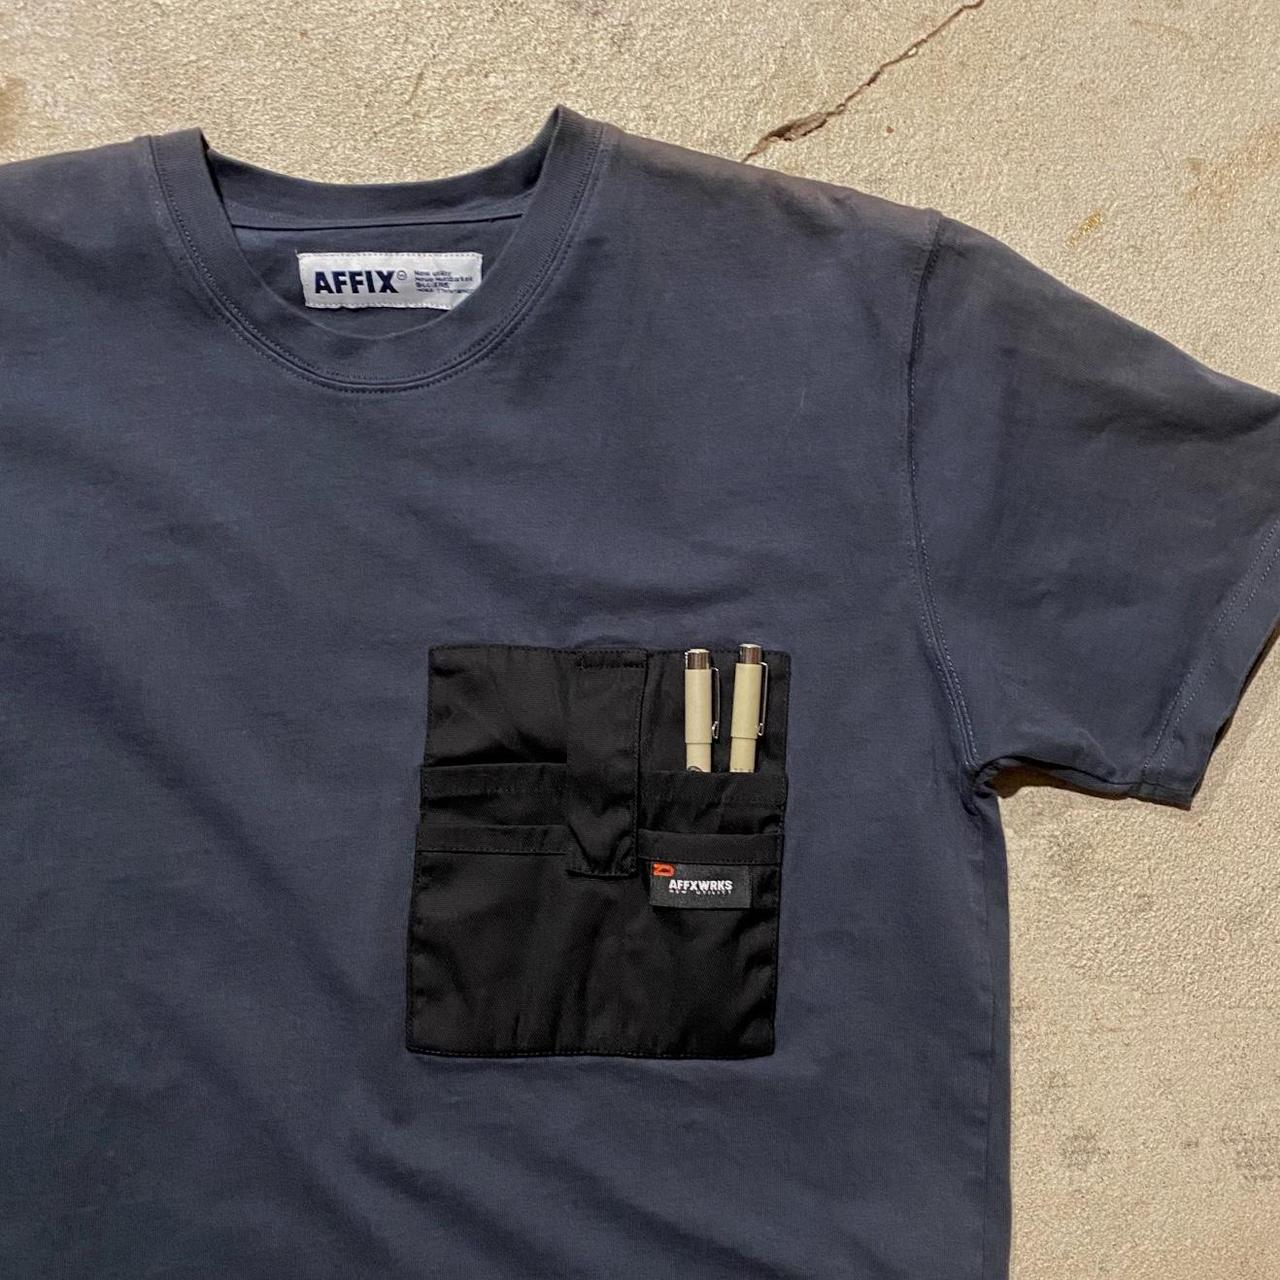 Affix Men's Grey and Navy T-shirt